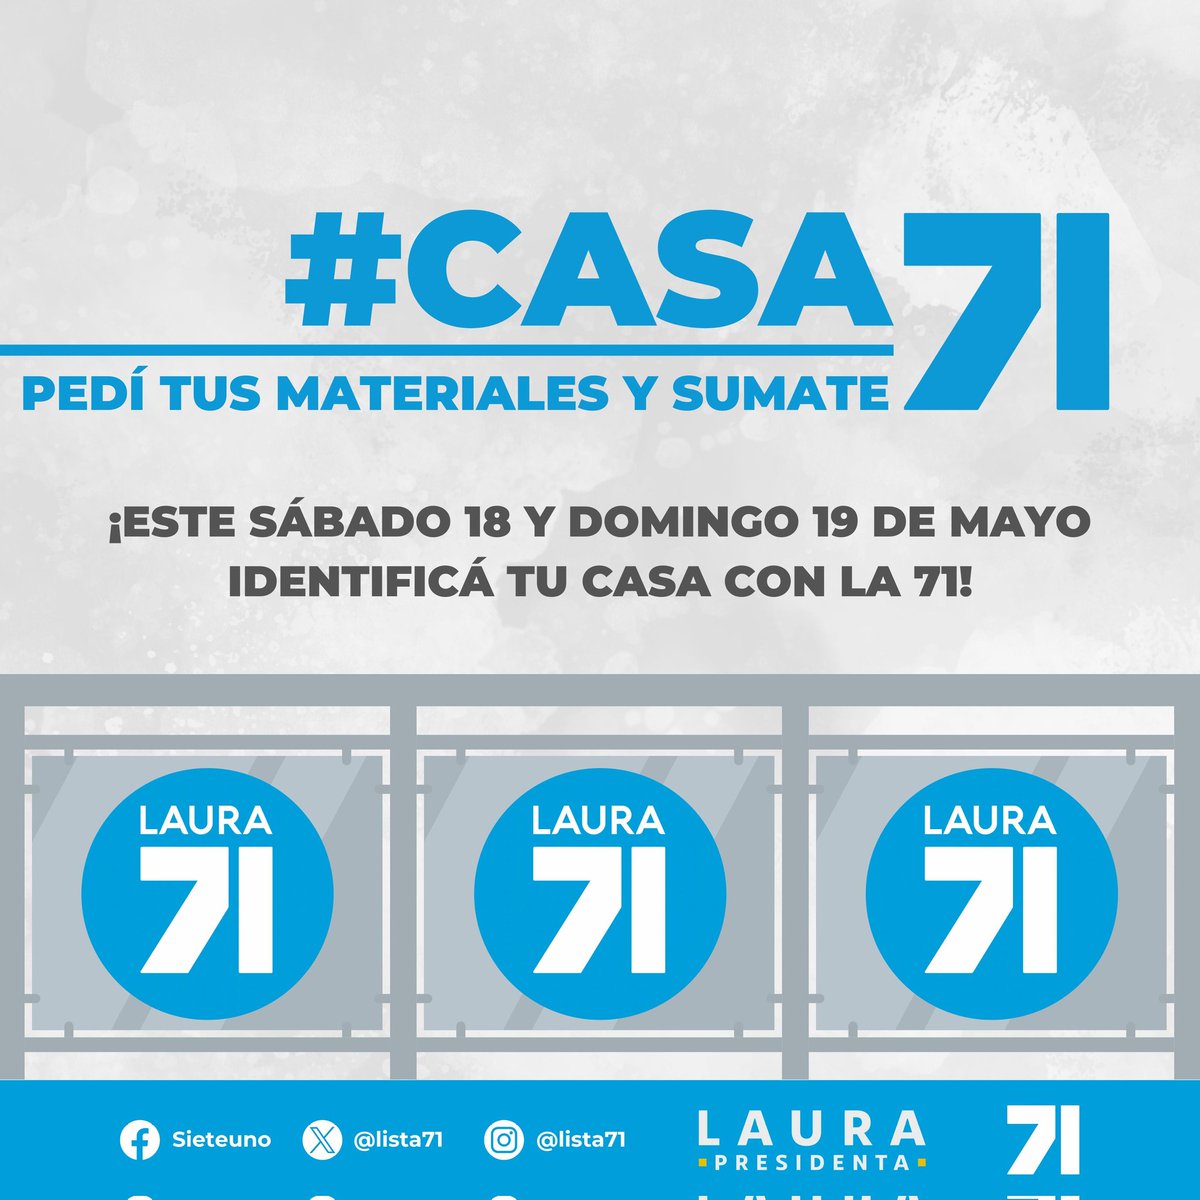 Empezamos a identificar 🏠 #Casa71 #HagamosHistoria.